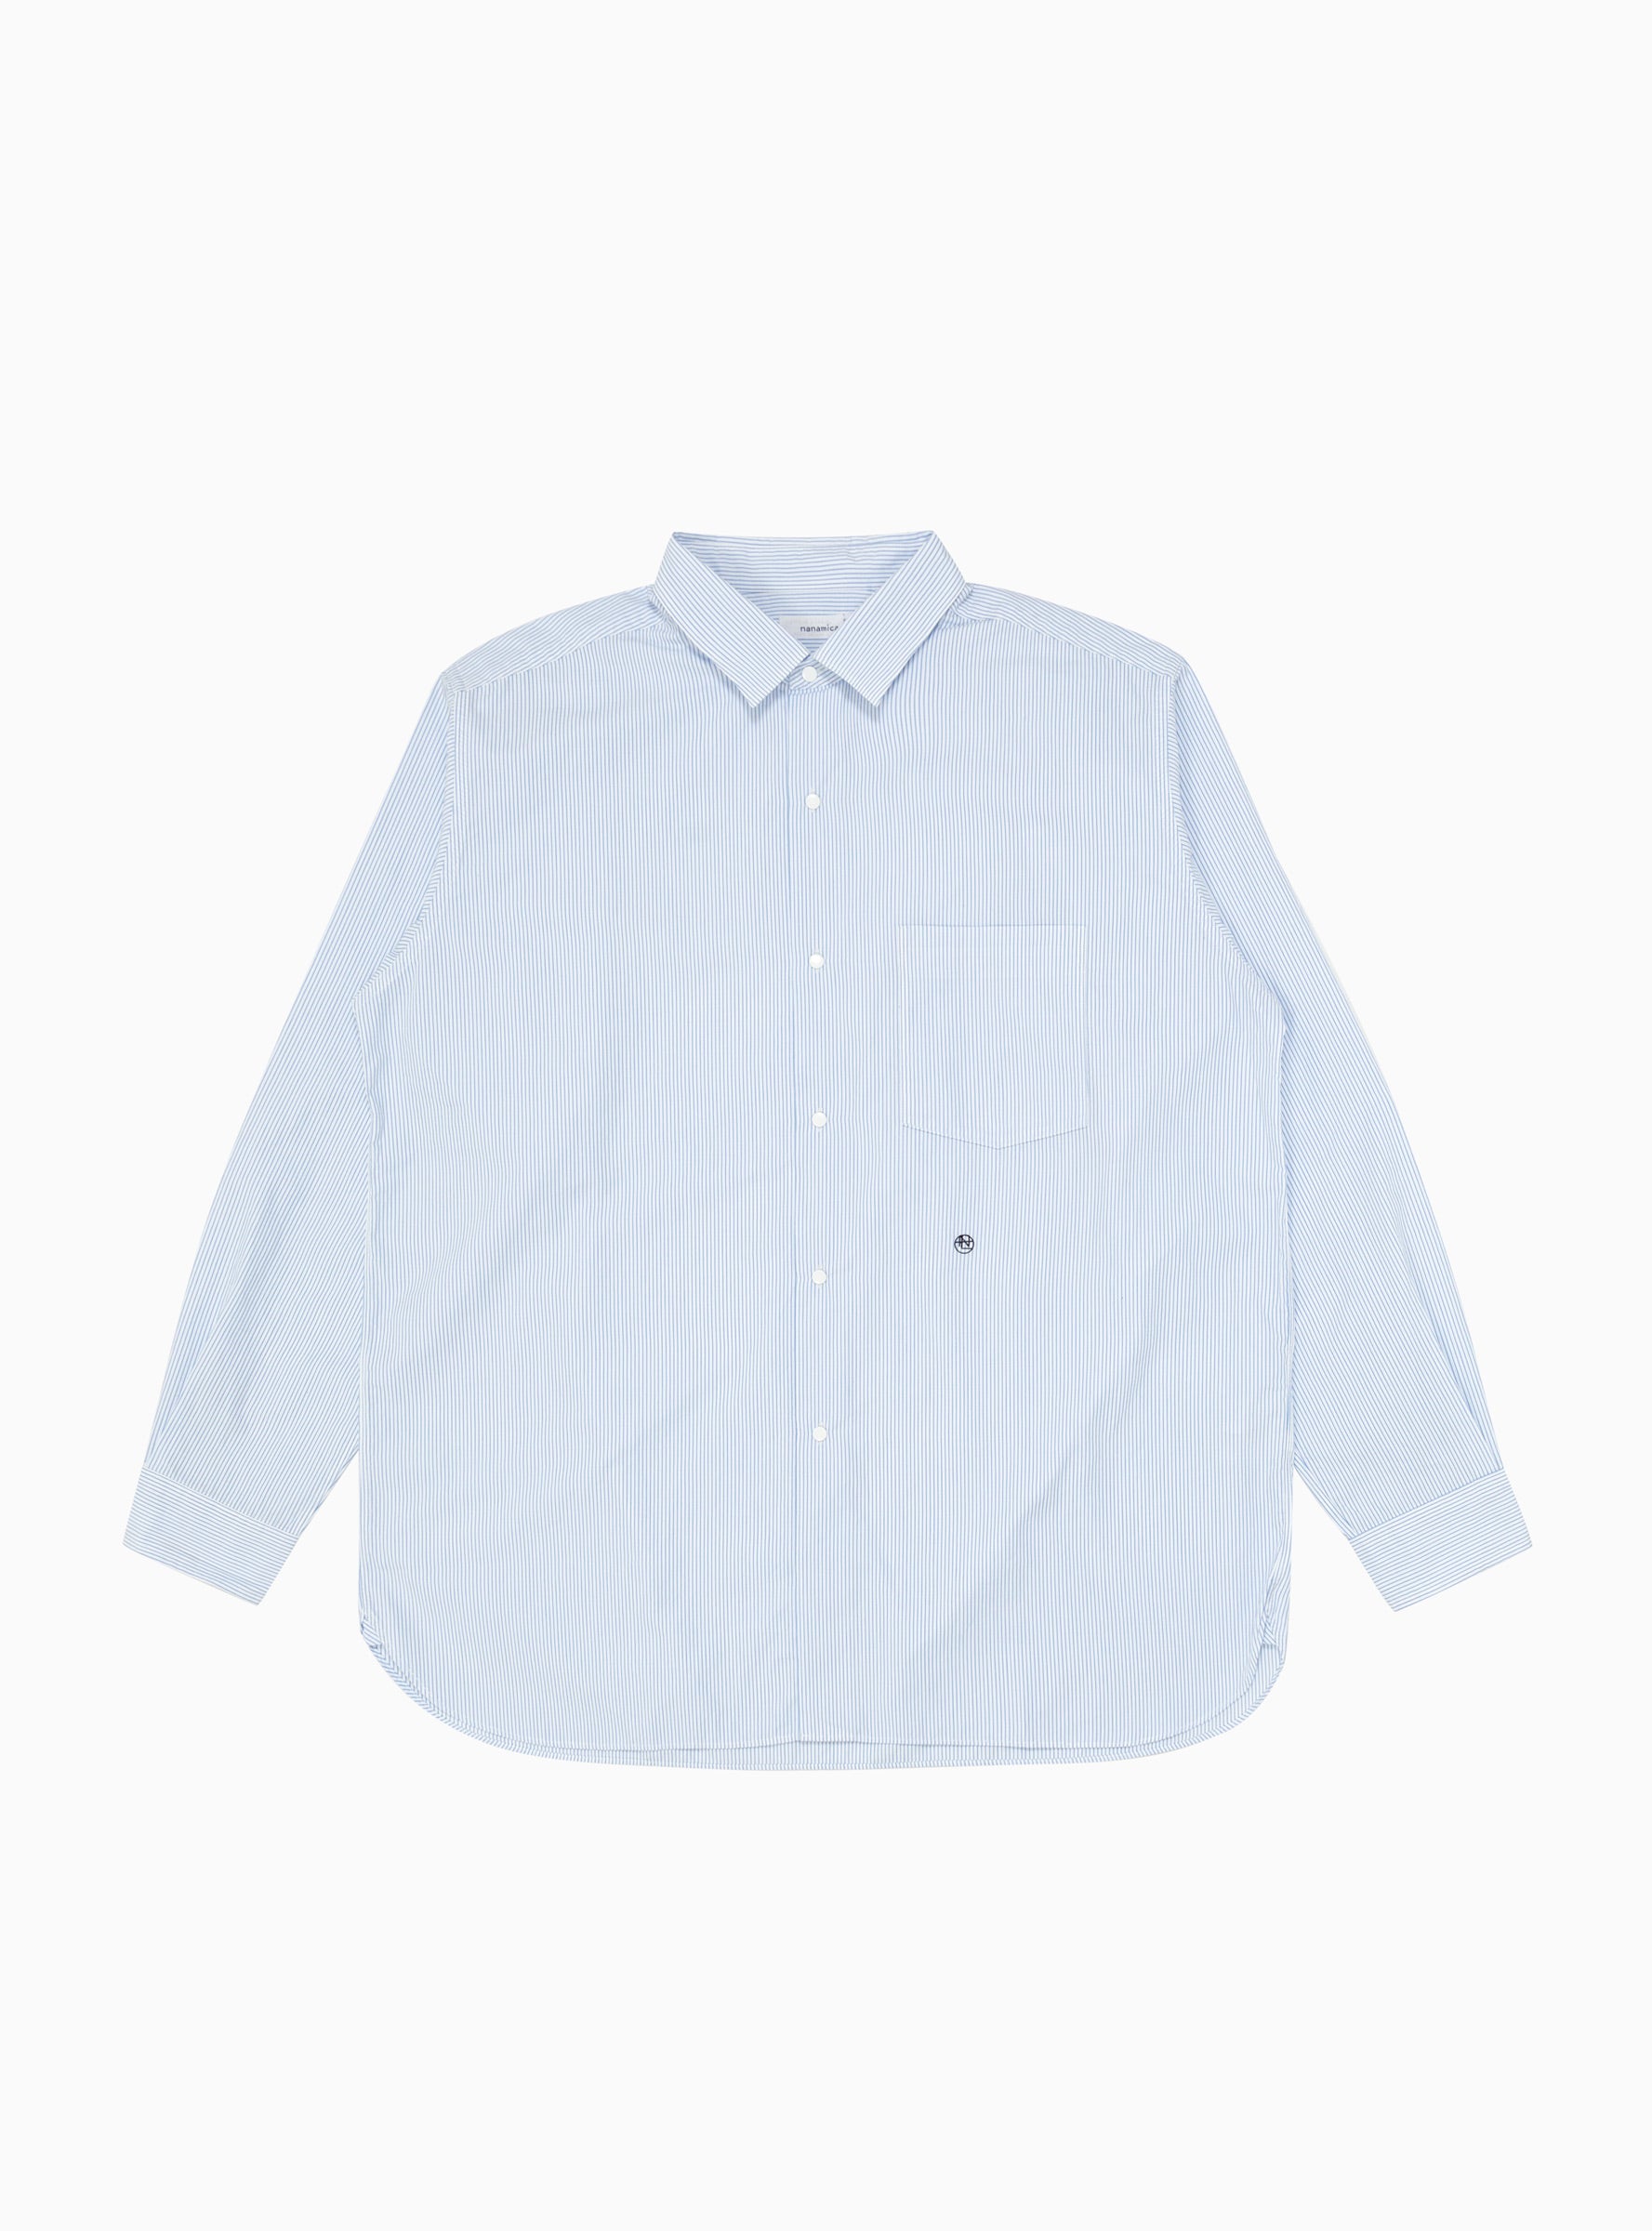 Regular Collar Wind Shirt Blue & White Stripe